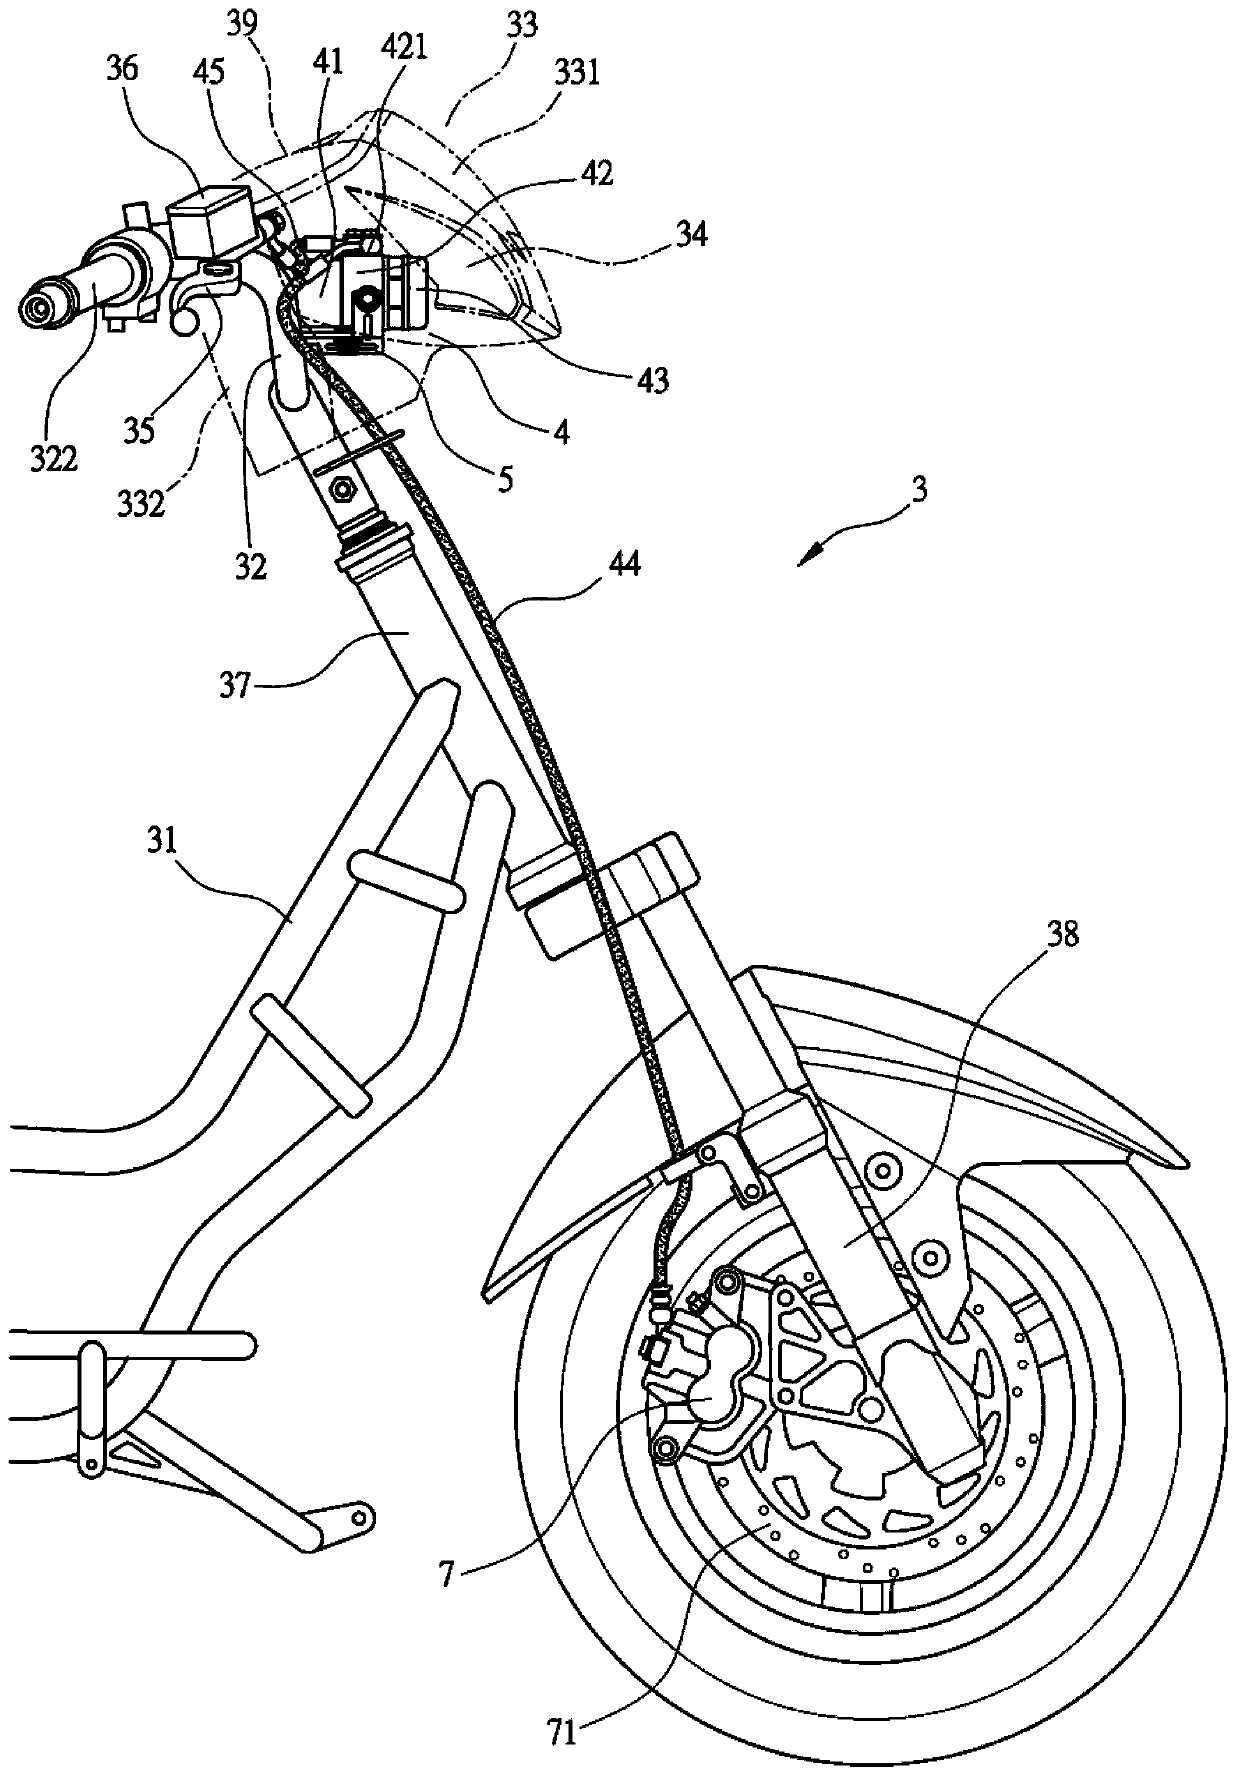 Motorcycle anti-skid brake system structure